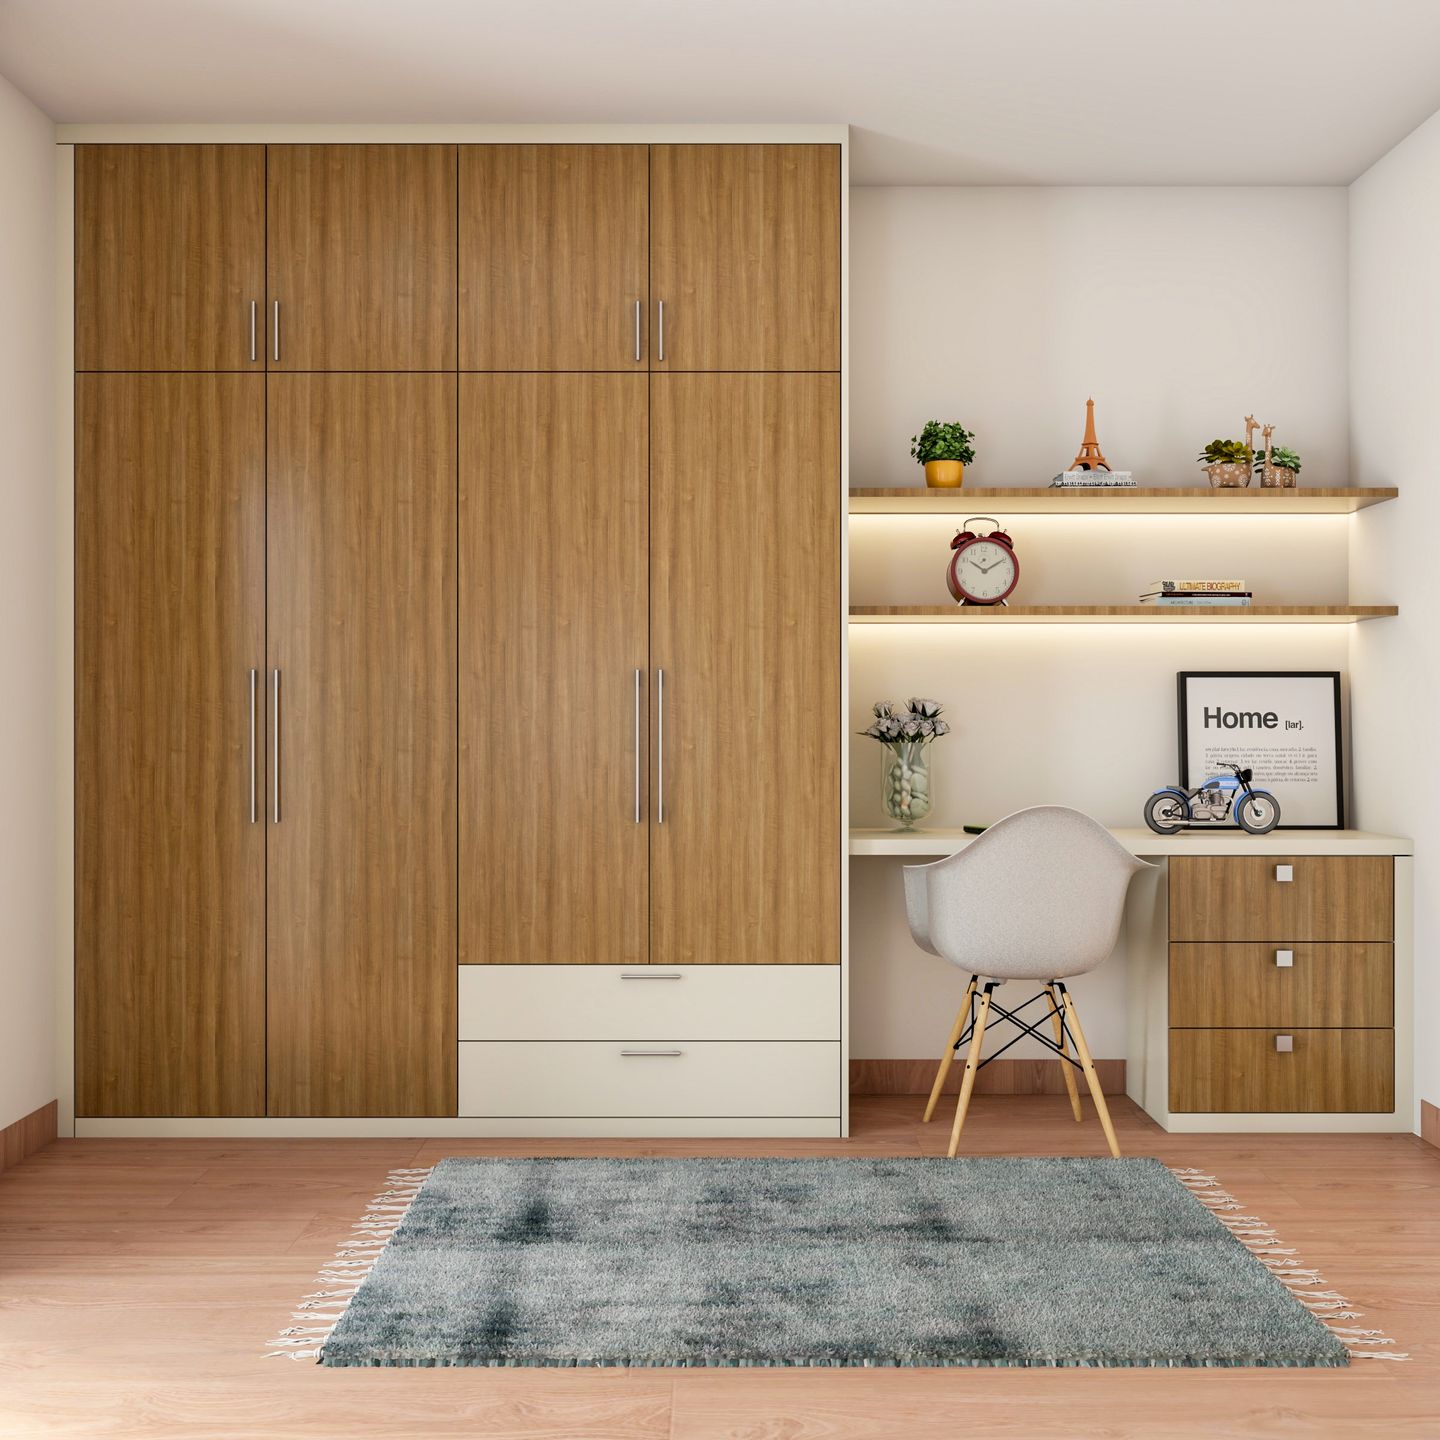 Classic Full-Length Wardrobe Design With Lofts | Livspace